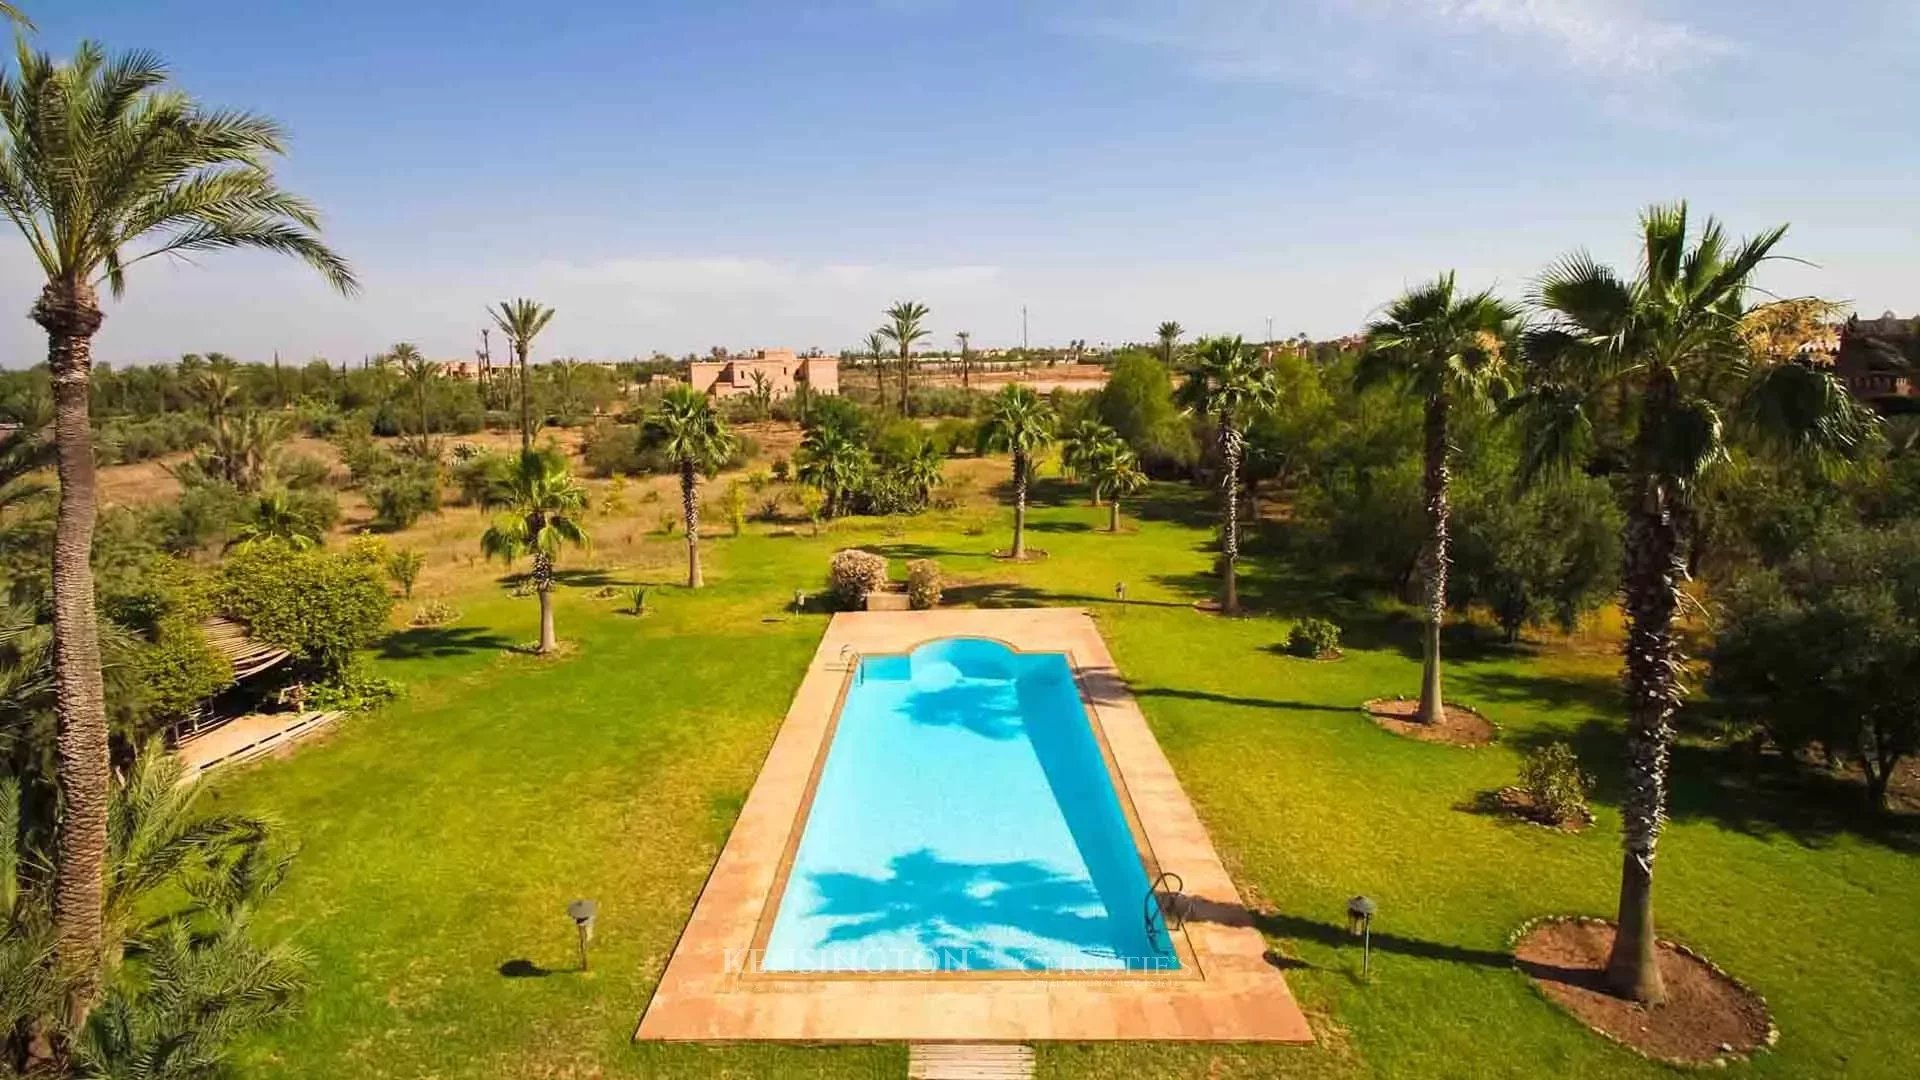 Villa Atlas in Marrakech, Morocco